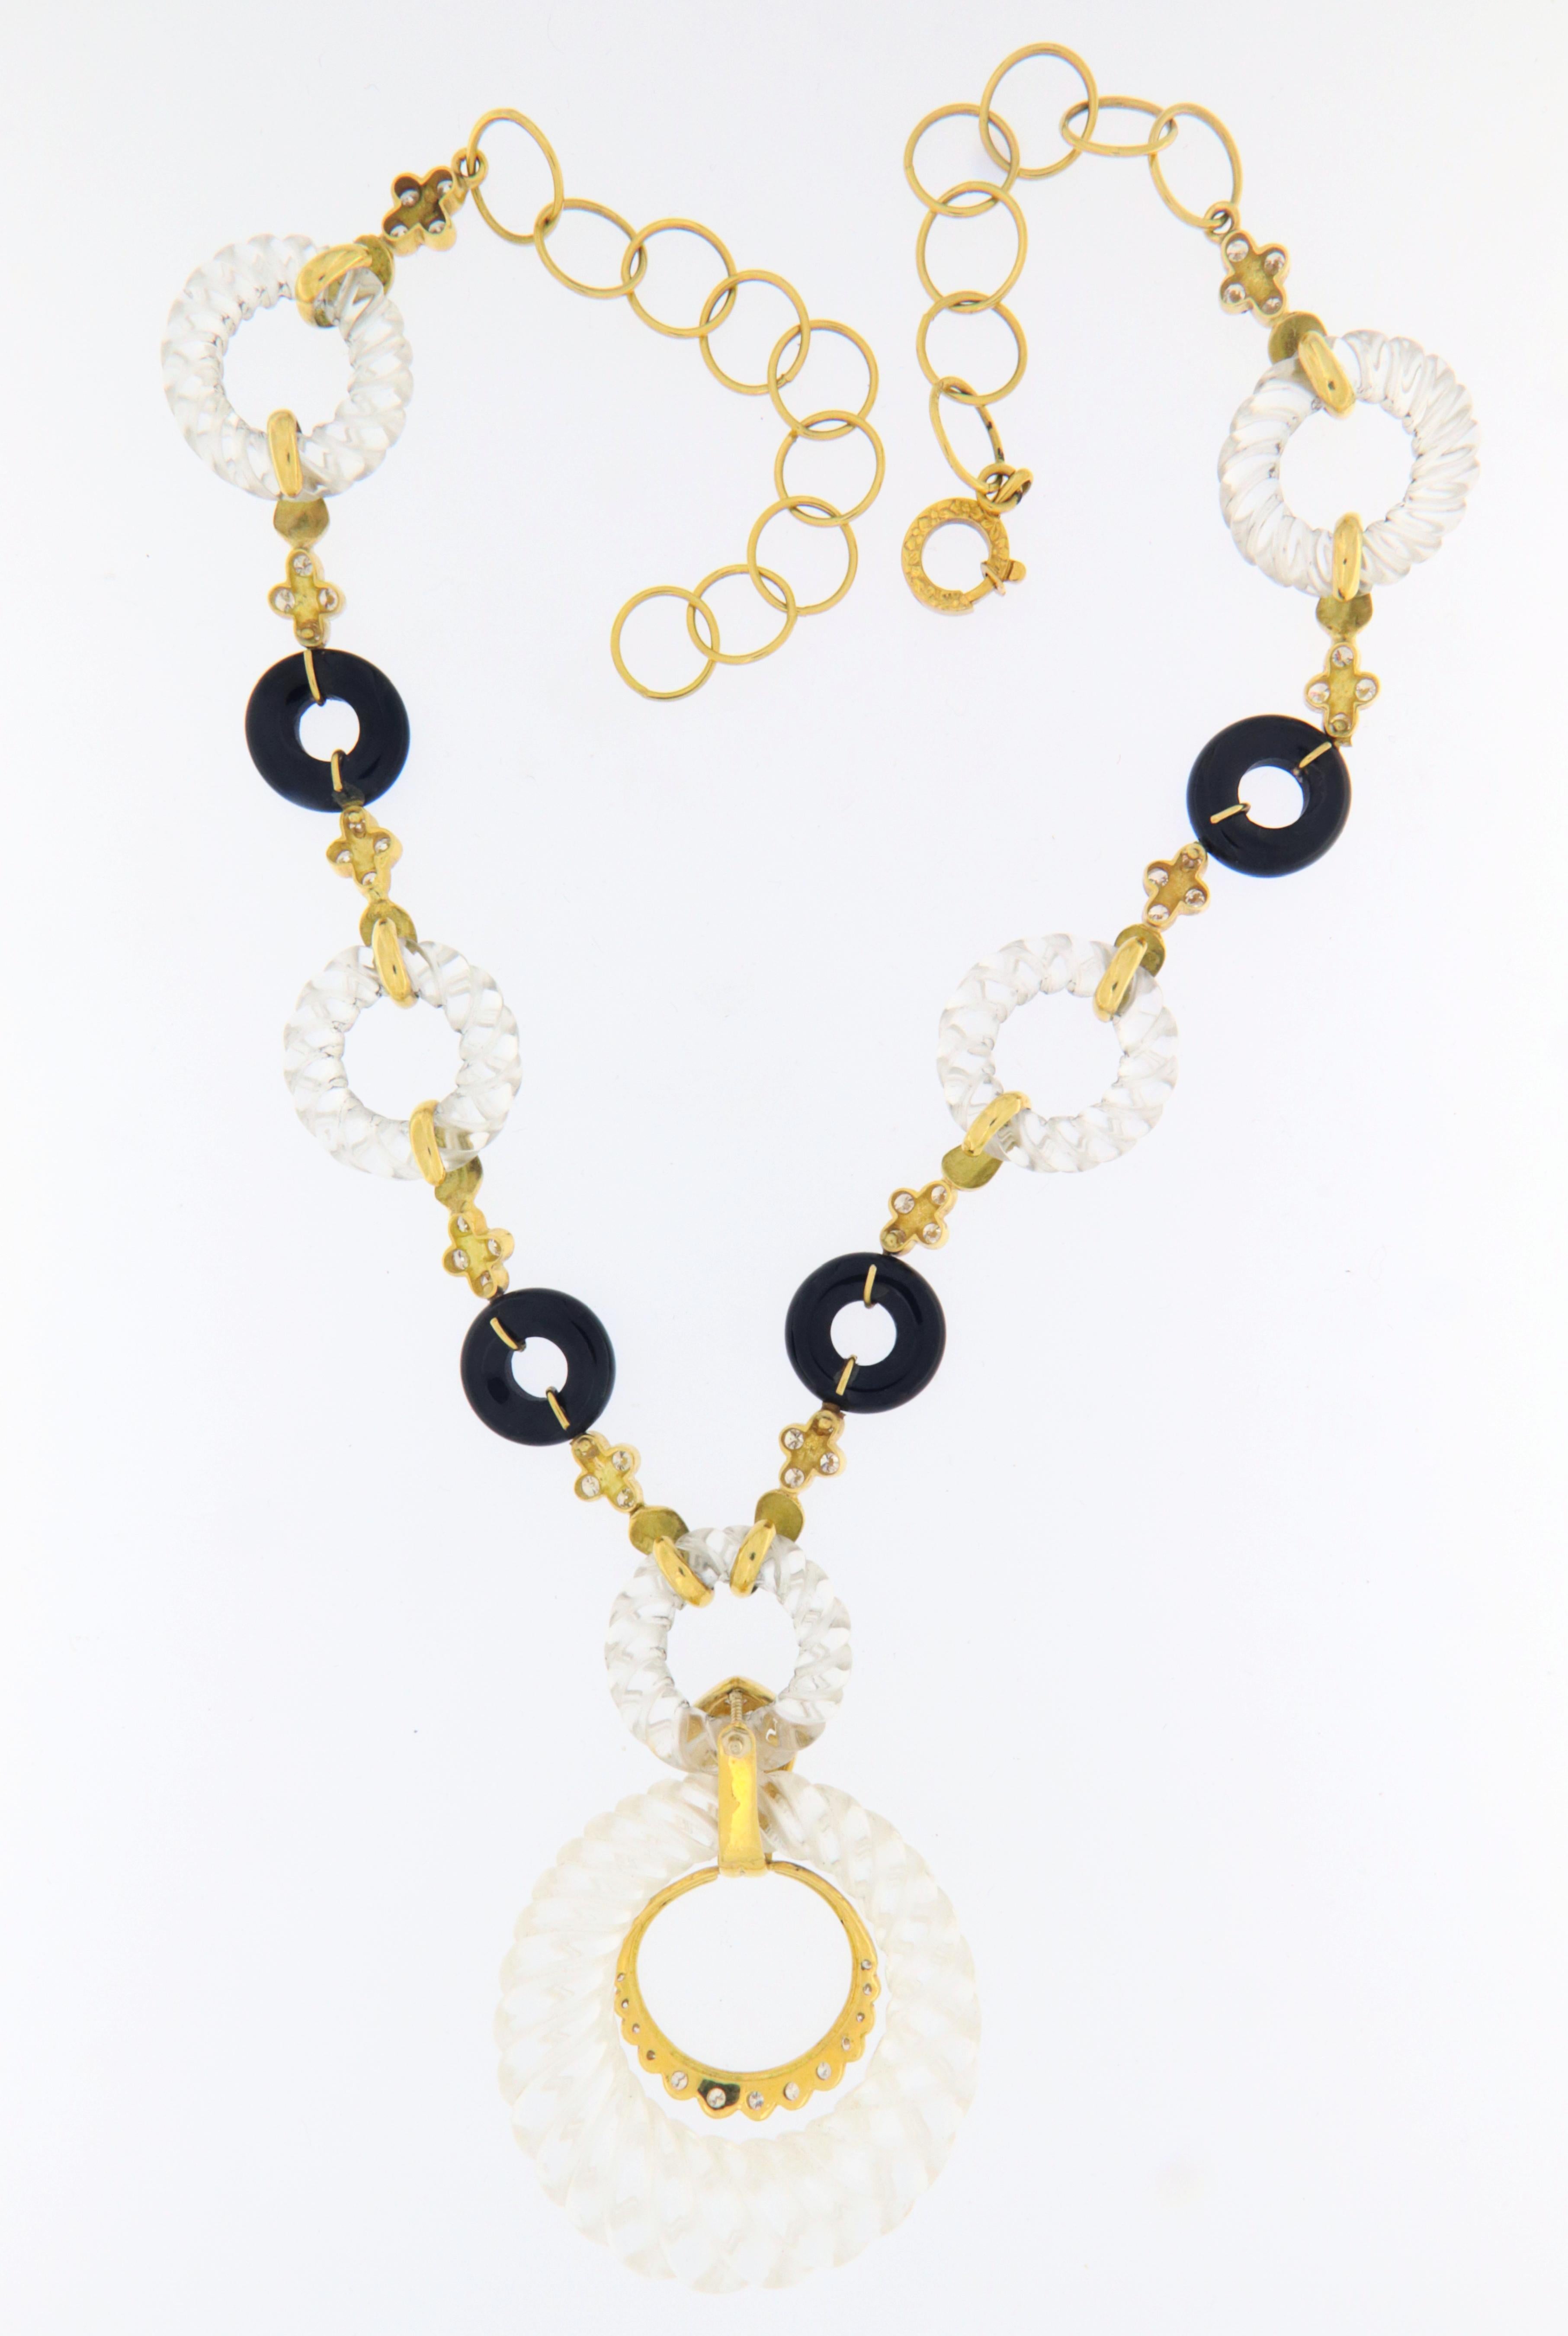 Brilliant Cut Rock Crystal Diamonds Onyx 18 Karat Yellow Gold Choker Necklace For Sale